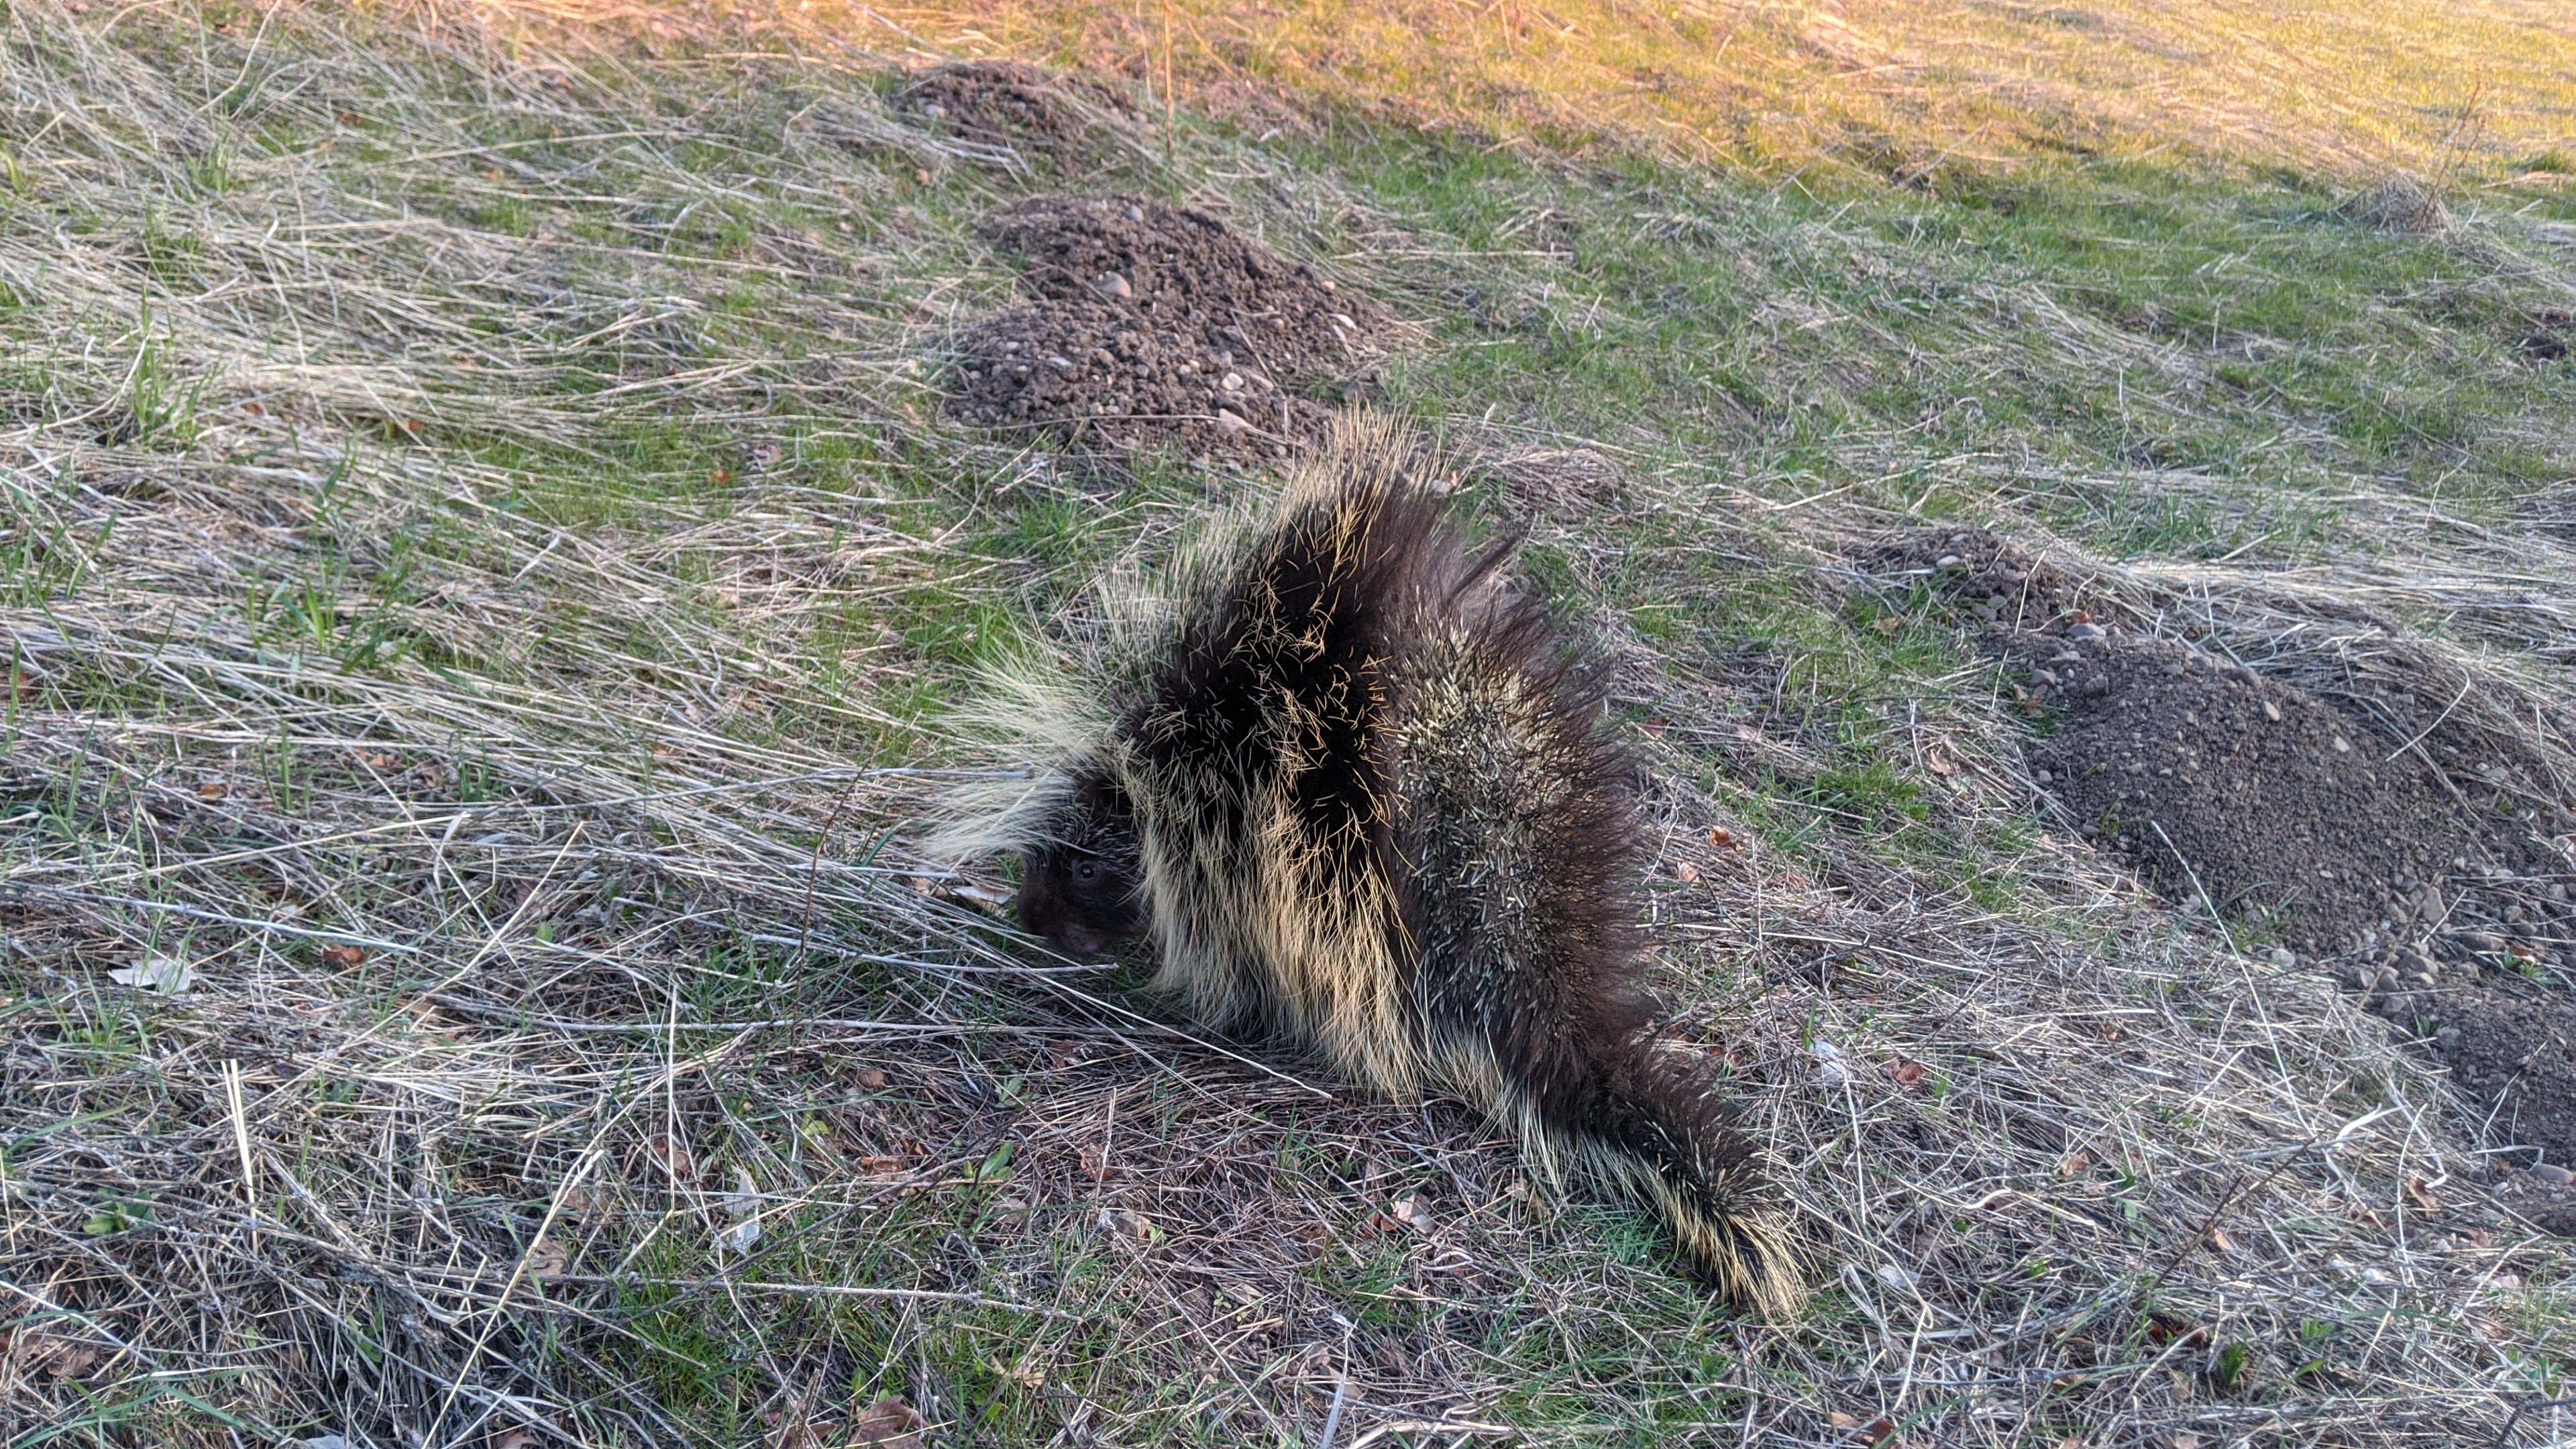 A North American porcupine foraging near the Bonneville Shoreline Trail in North Salt Lake.